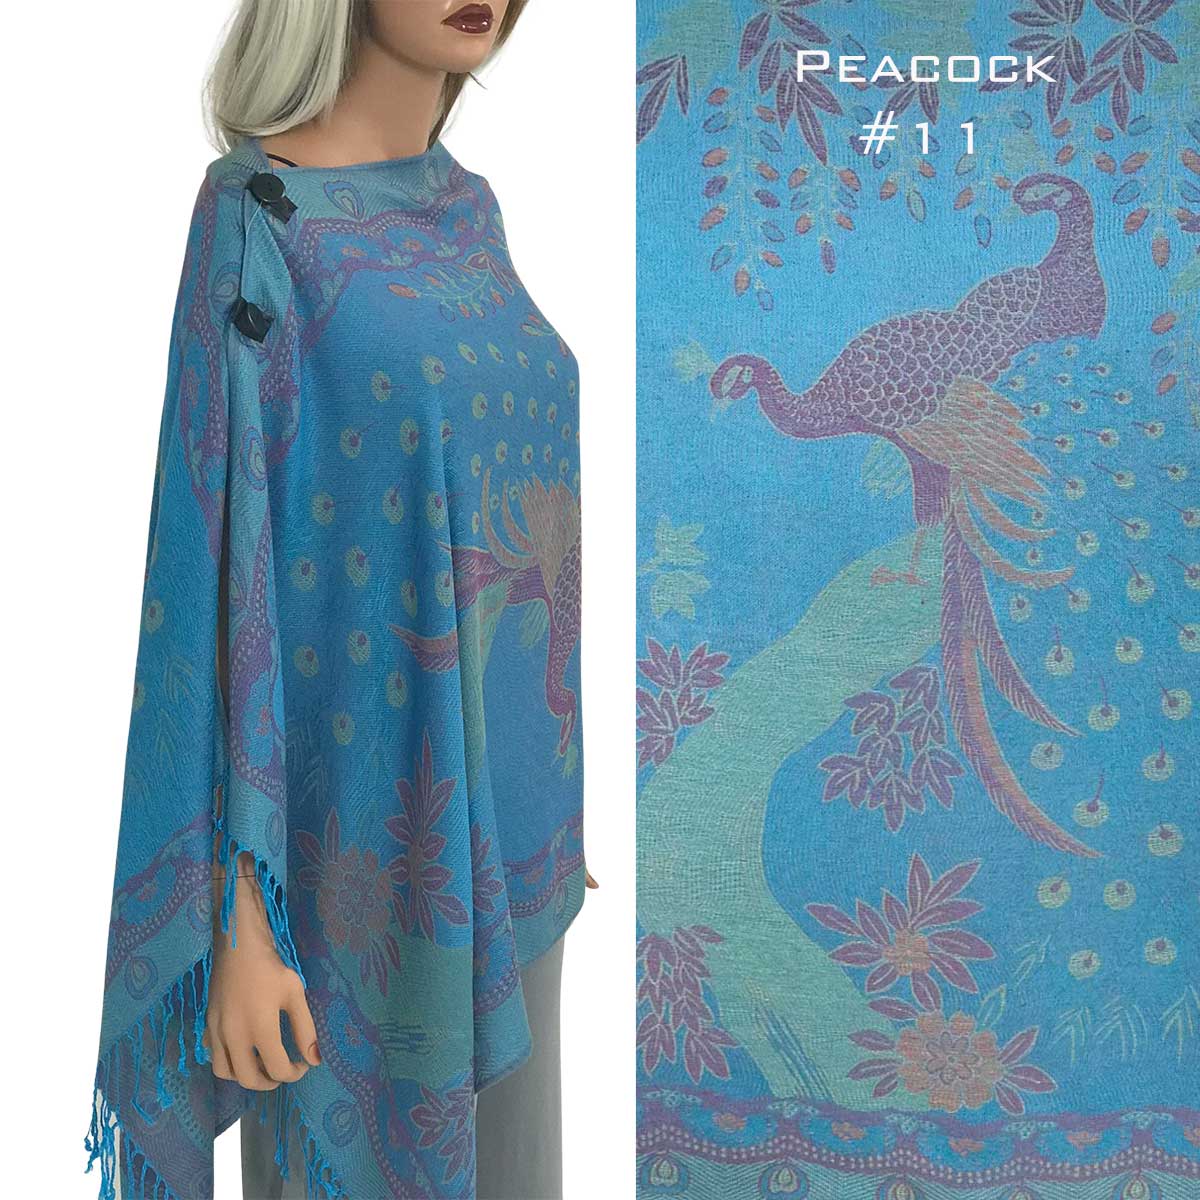 Peacock - #11<br> Pashmina Style Button Shawl